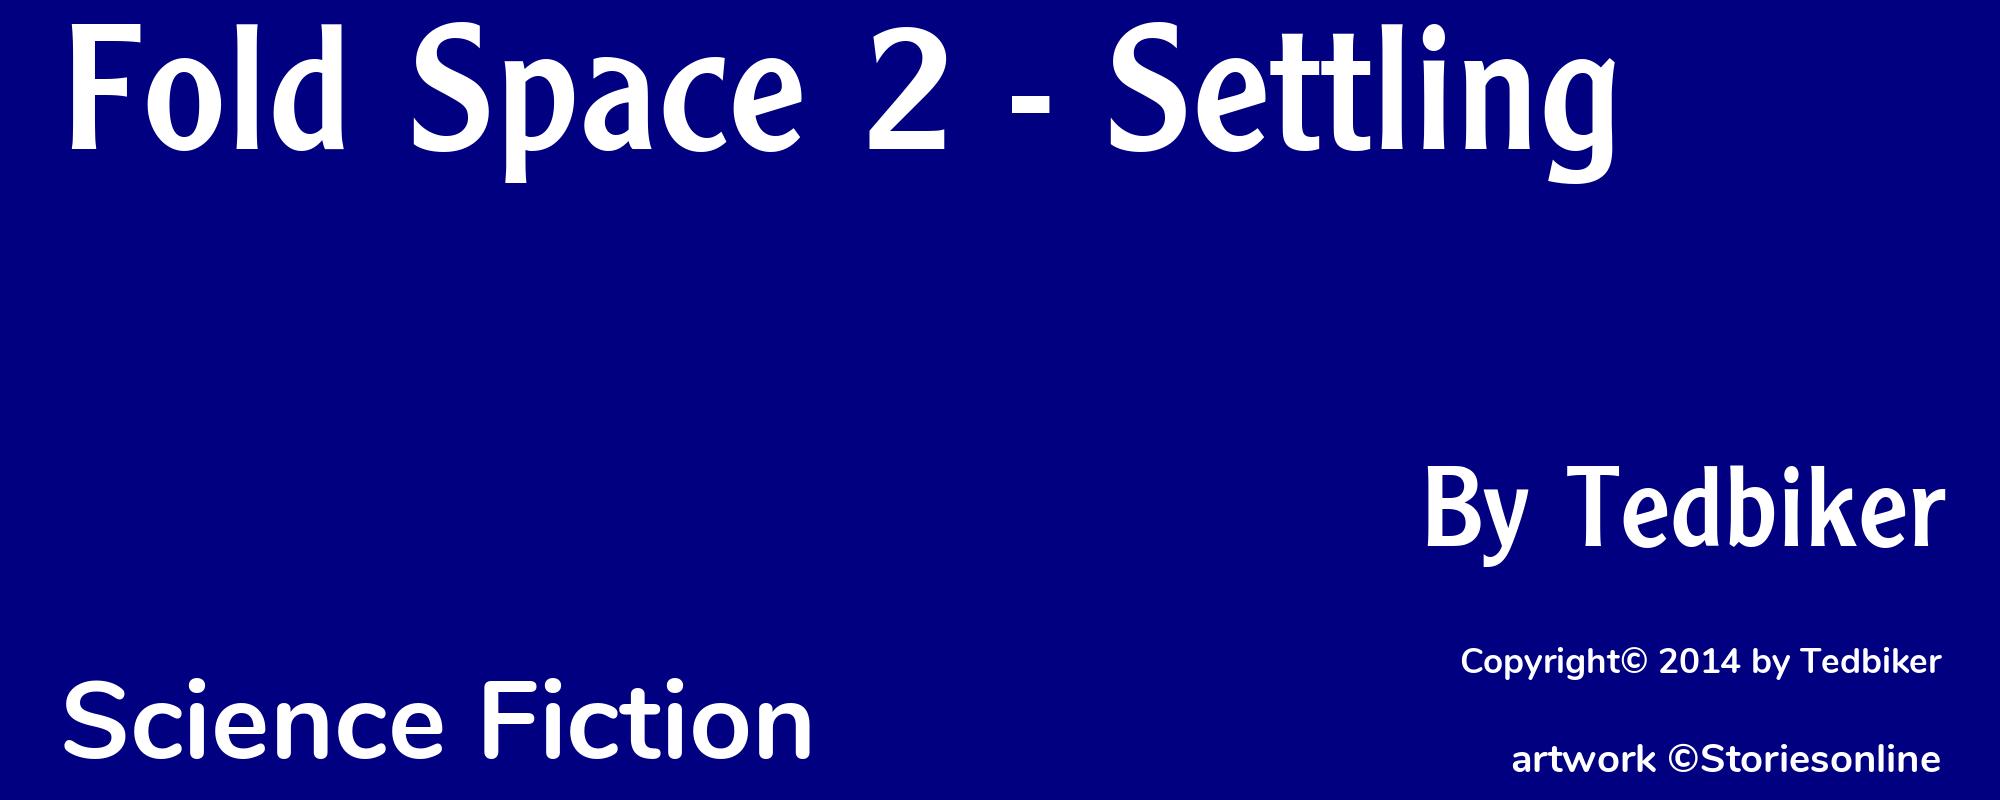 Fold Space 2 - Settling - Cover